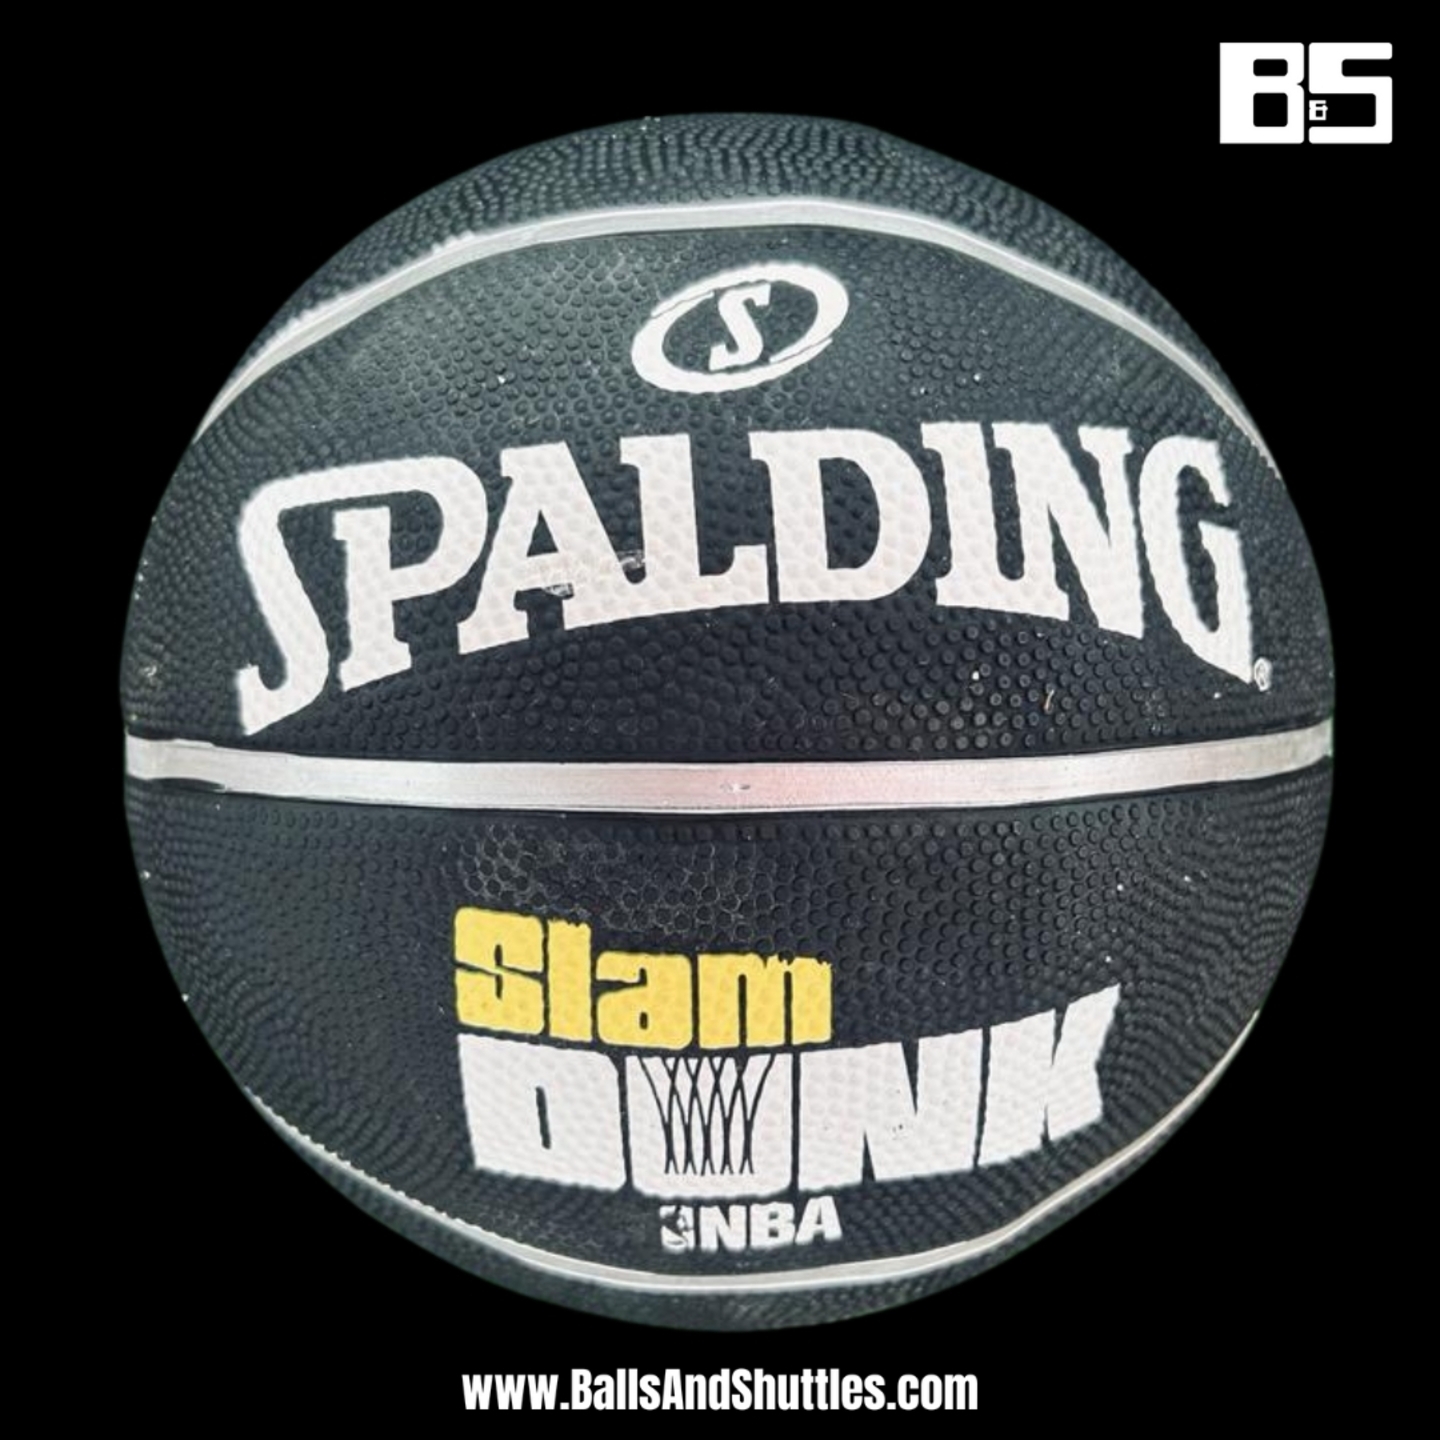 SPALDING SLAM DUNK BASKETBALL | SPALDING SIZE 6 BASKETBALL | SPALDING BASKETBALL